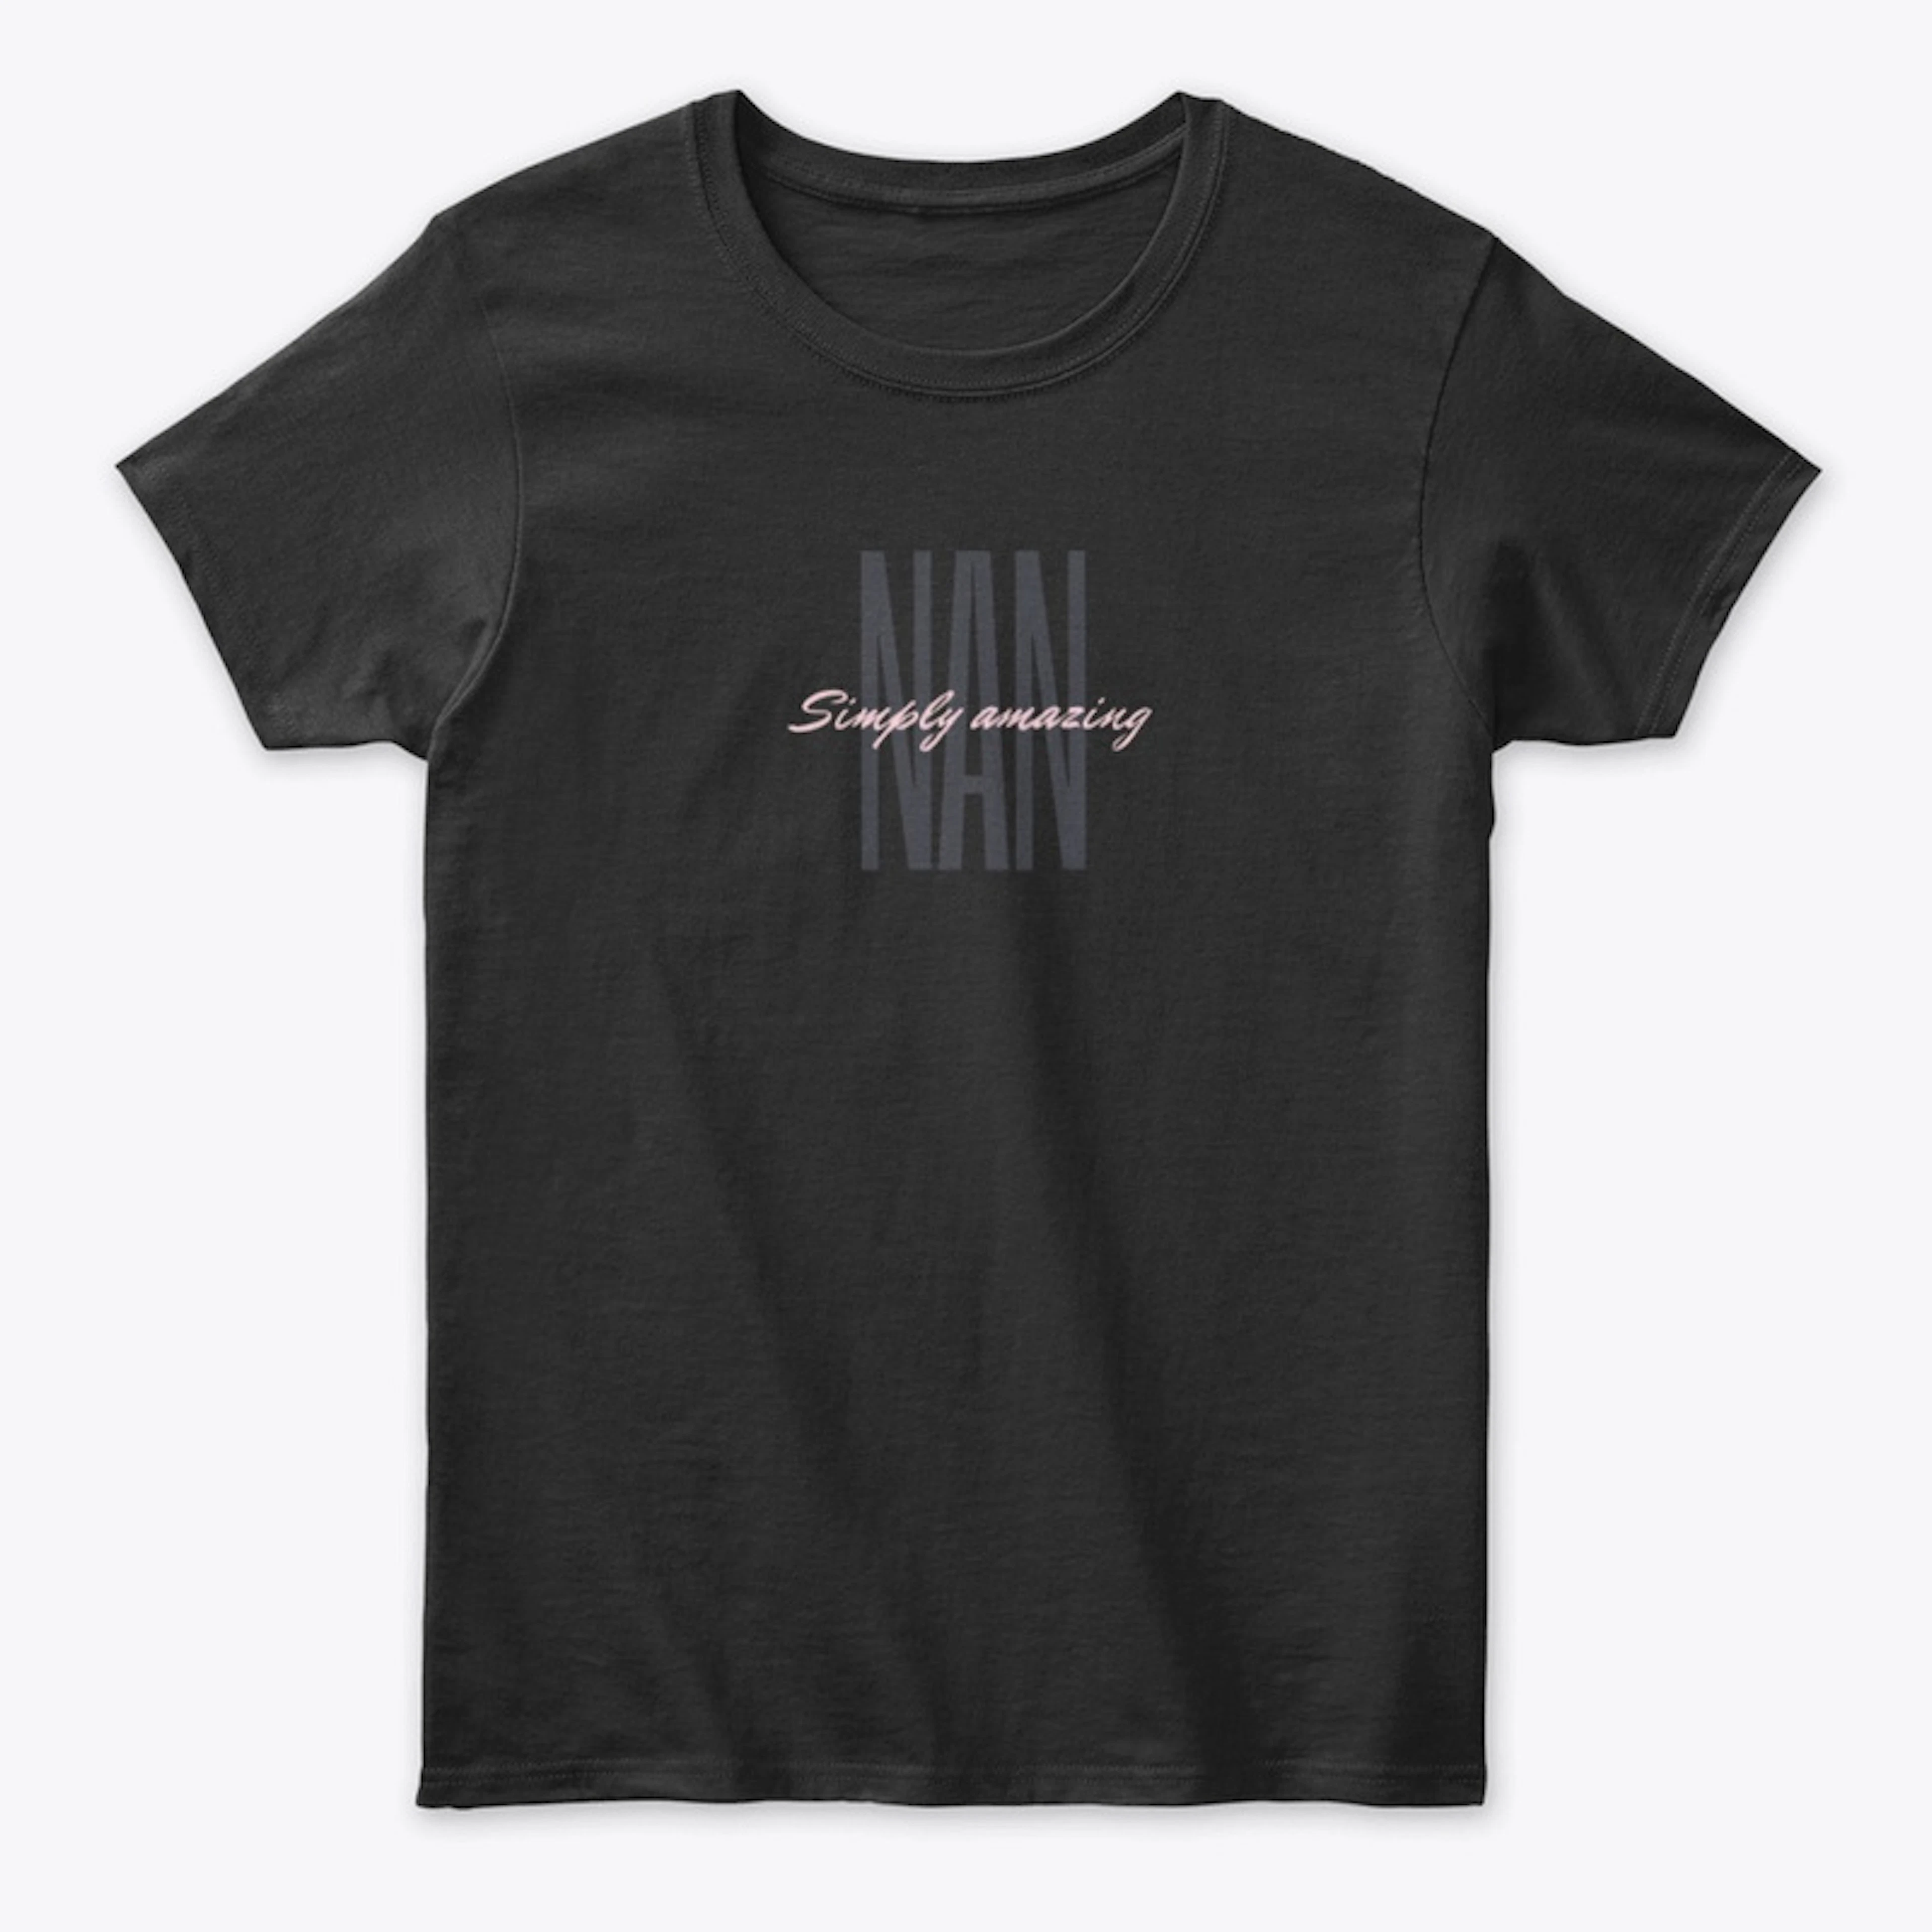 NAN - Simply amazing T-Shirt / Bag